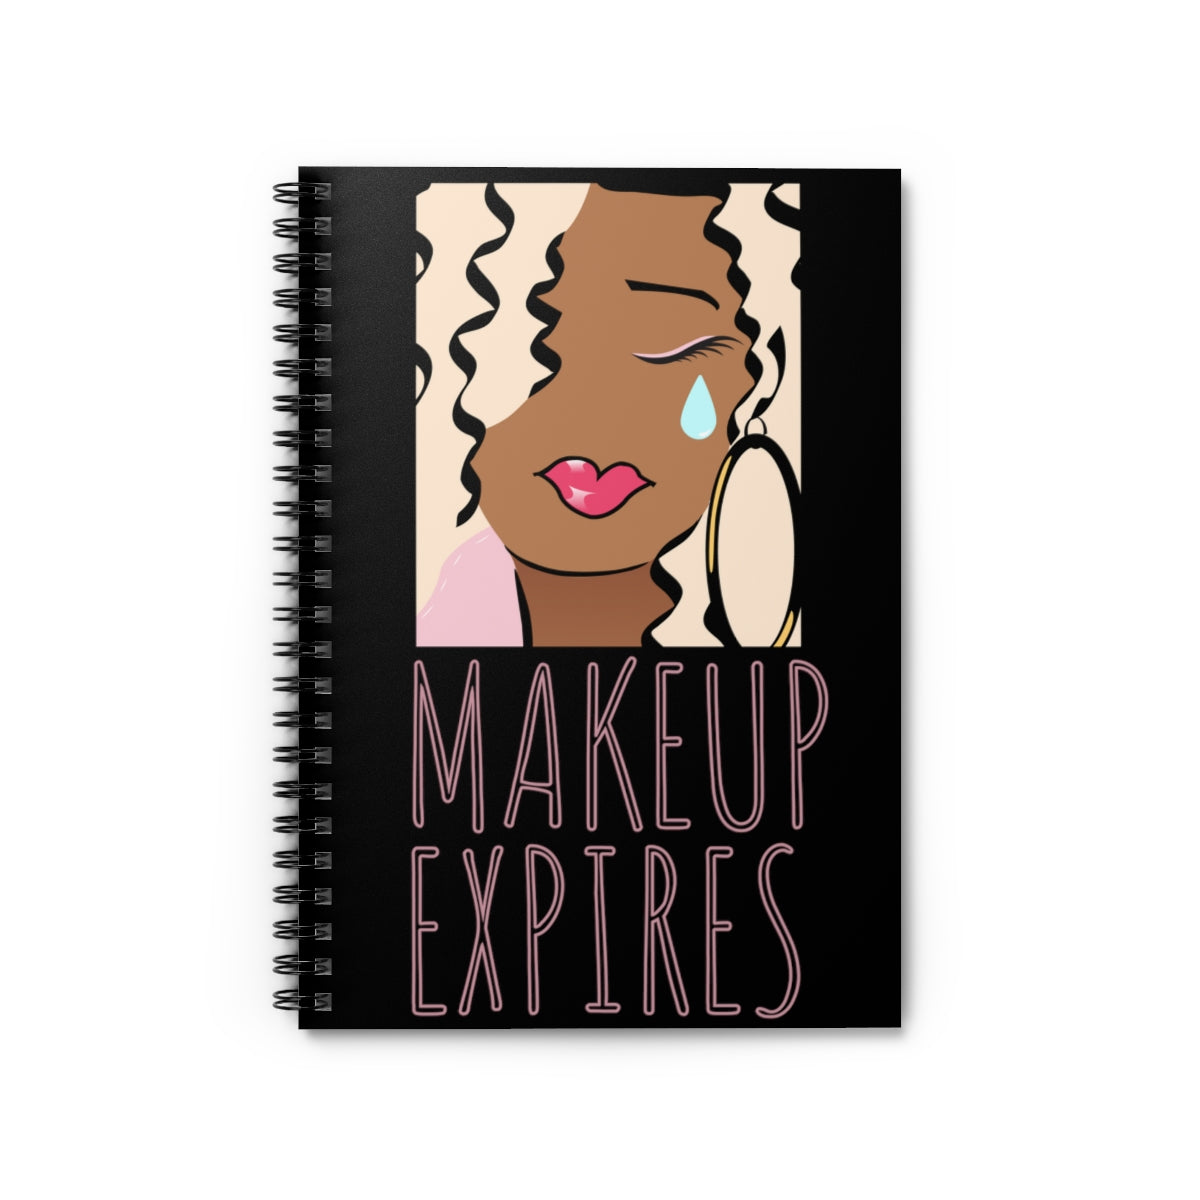 Makeup Expires Spiral Notebook